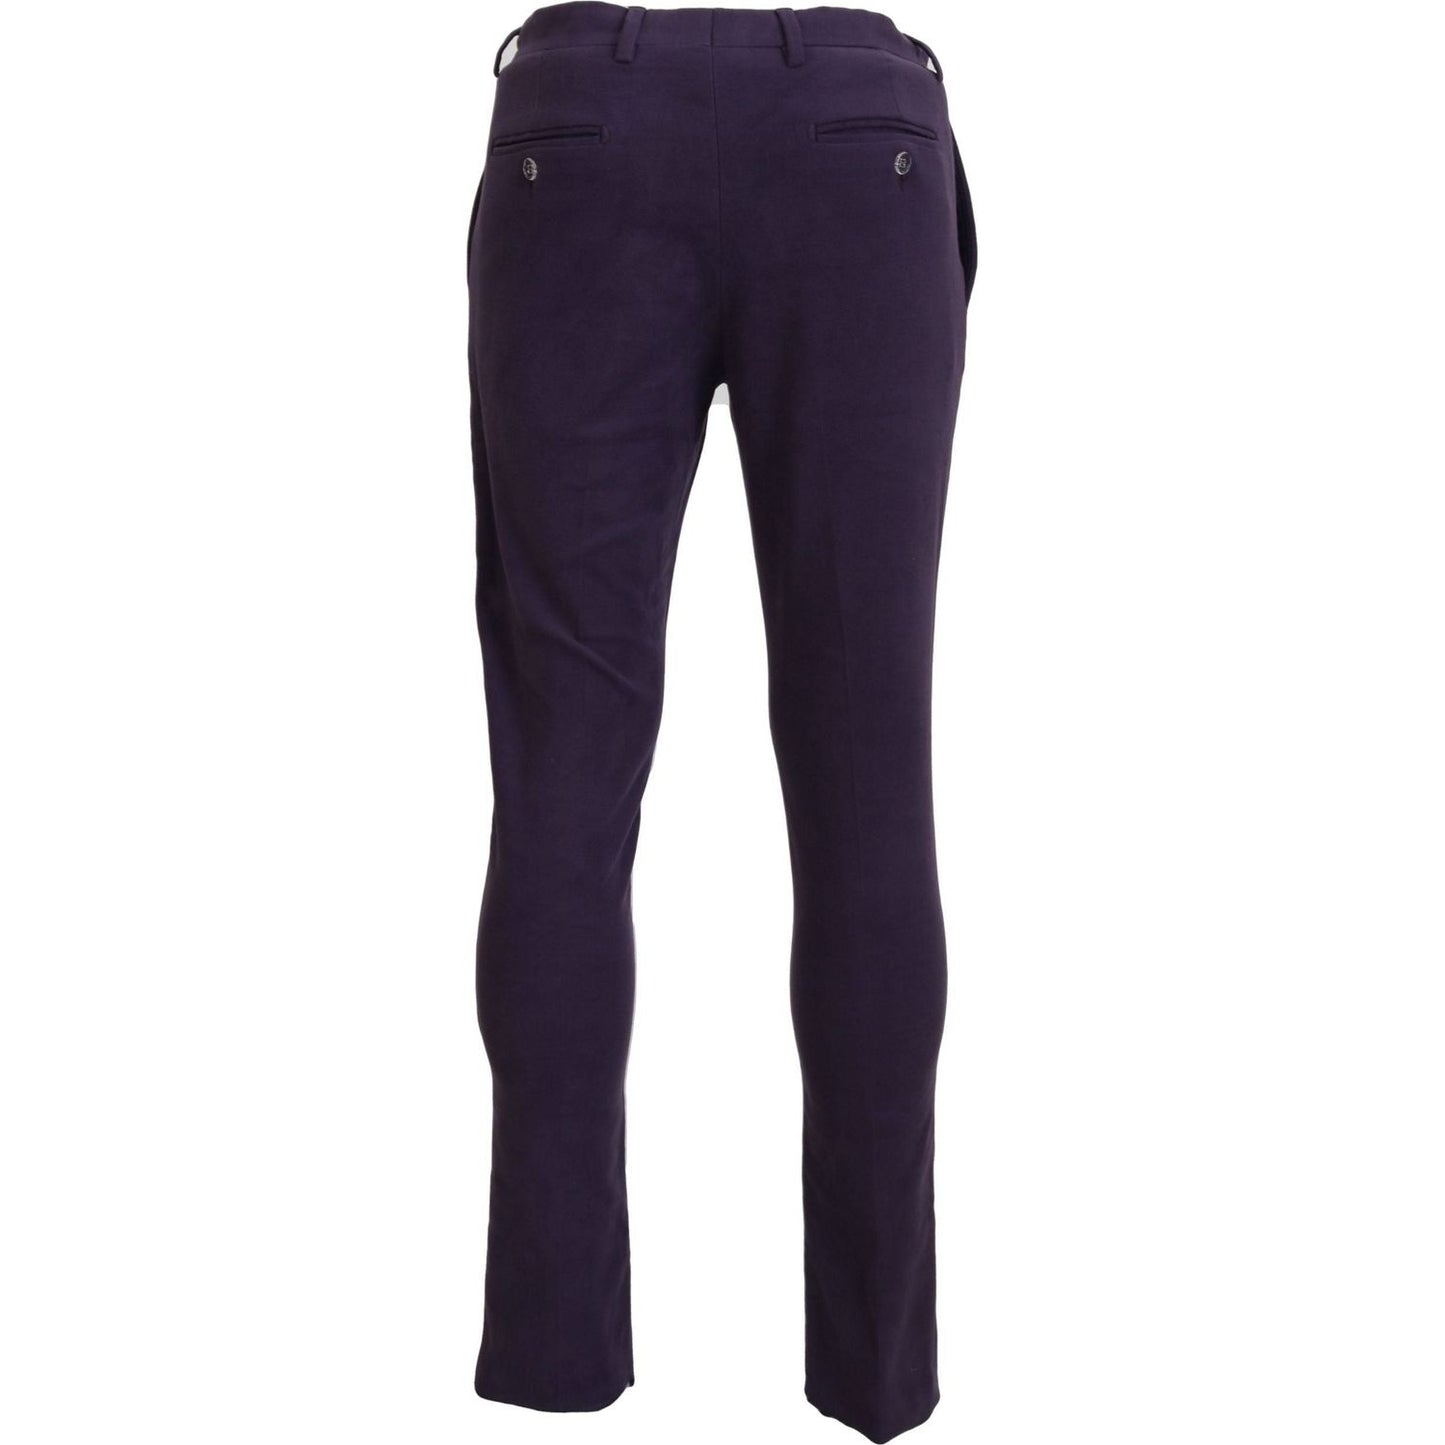 BENCIVENGA Elegant Purple Cotton Trousers purple-pure-cotton-tapered-mens-pants IMG_5472-scaled-cbe723f8-c47.jpg